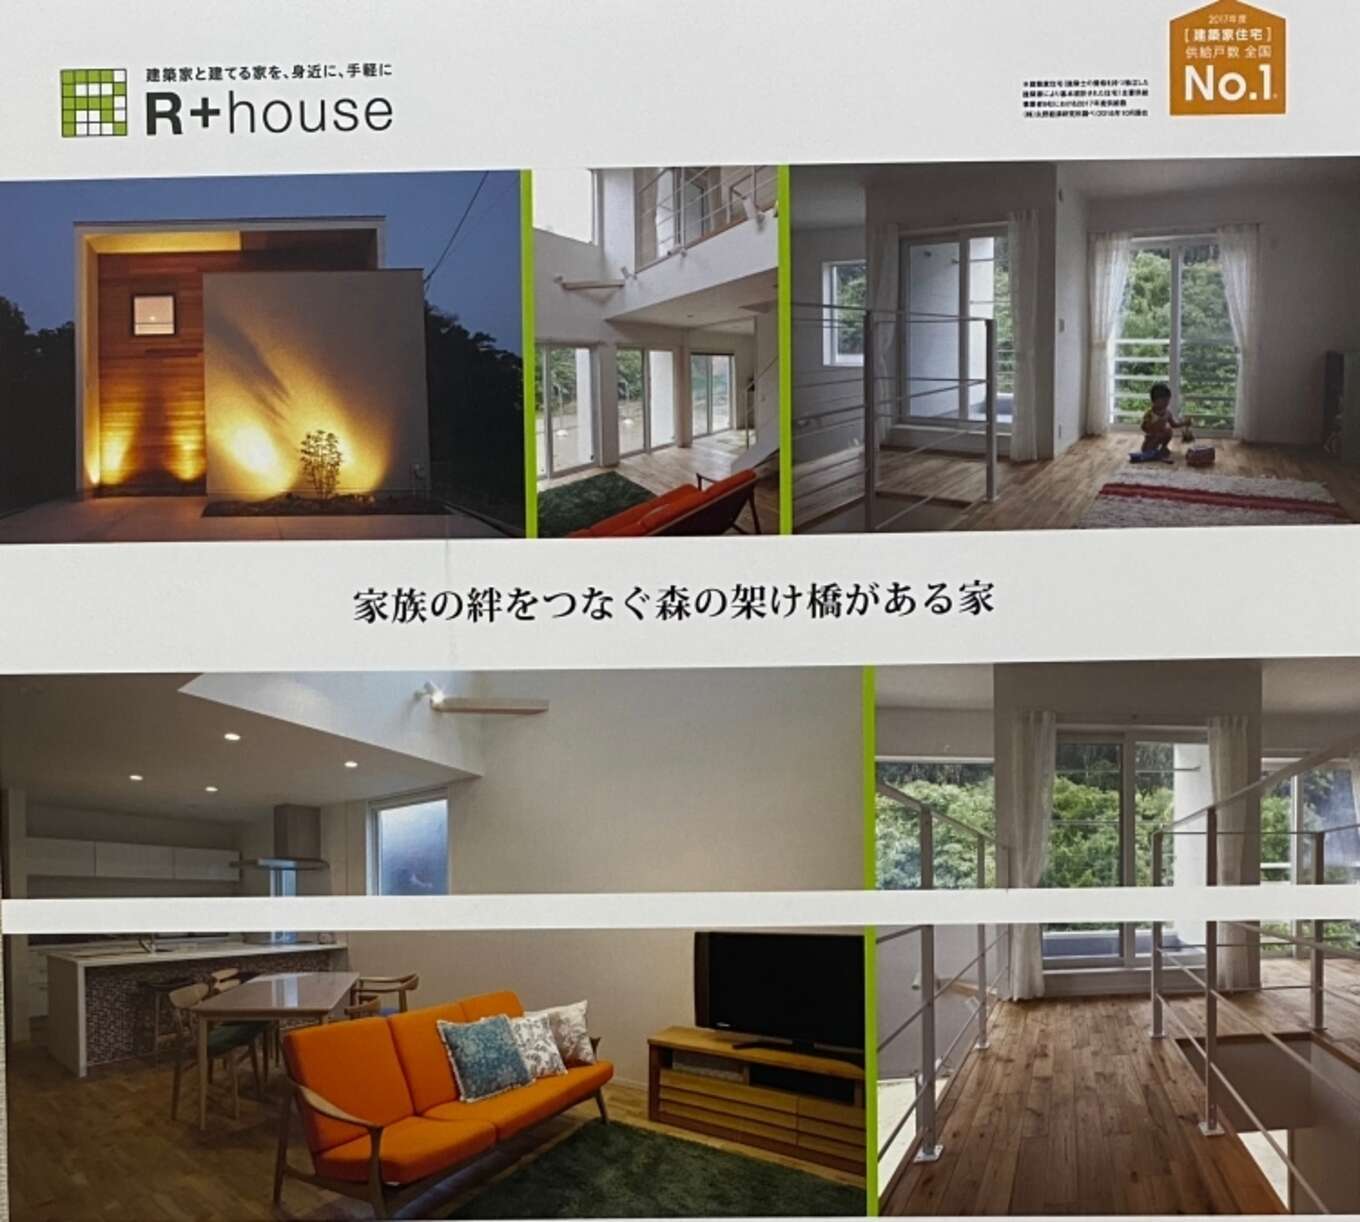 R+houseの広告画像